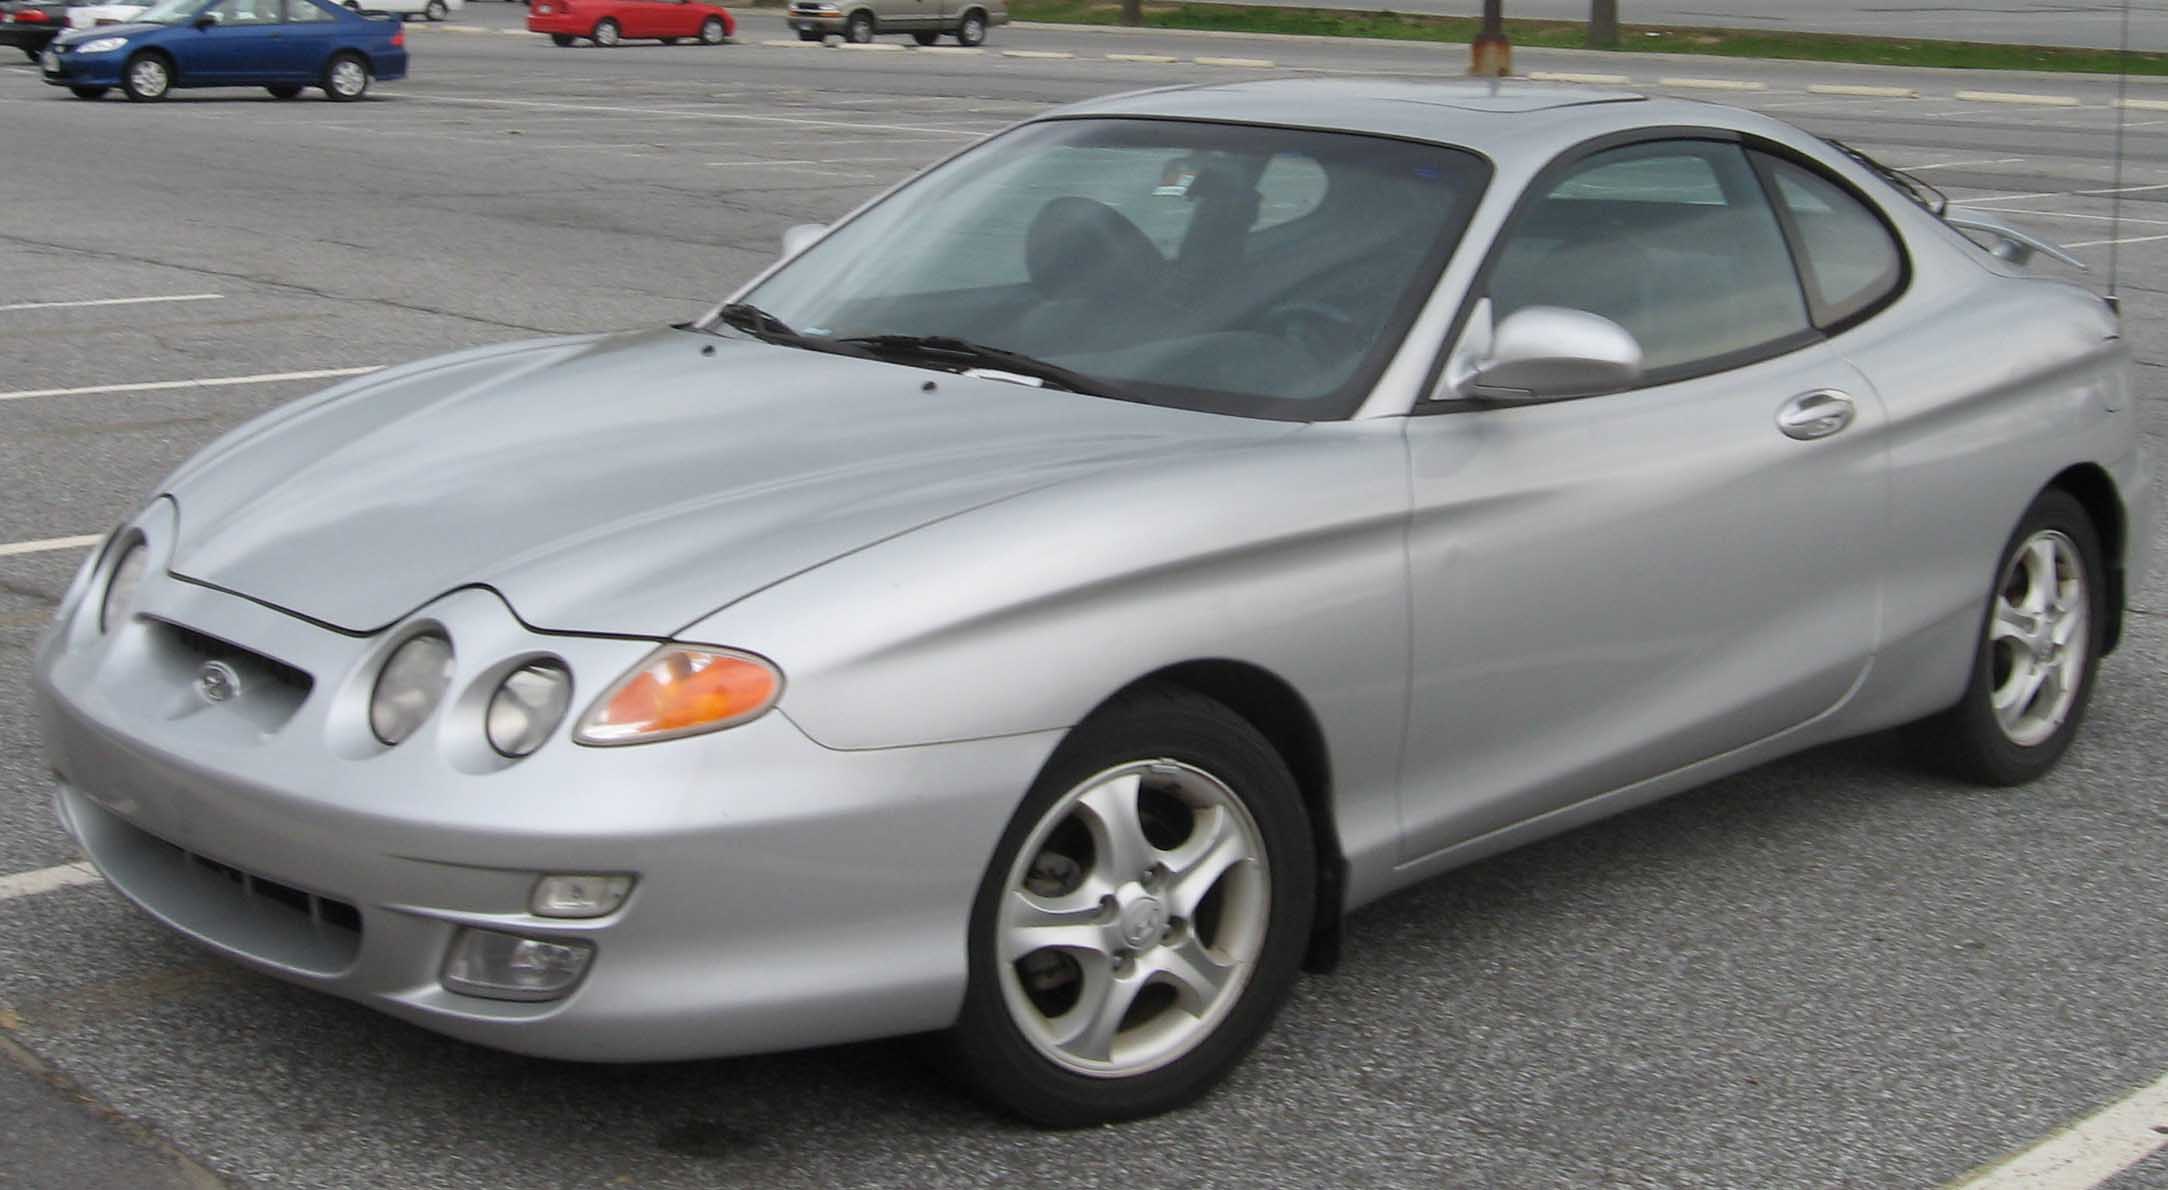 File:2000-2001 Hyundai Tiburon.jpg - Wikimedia Commons